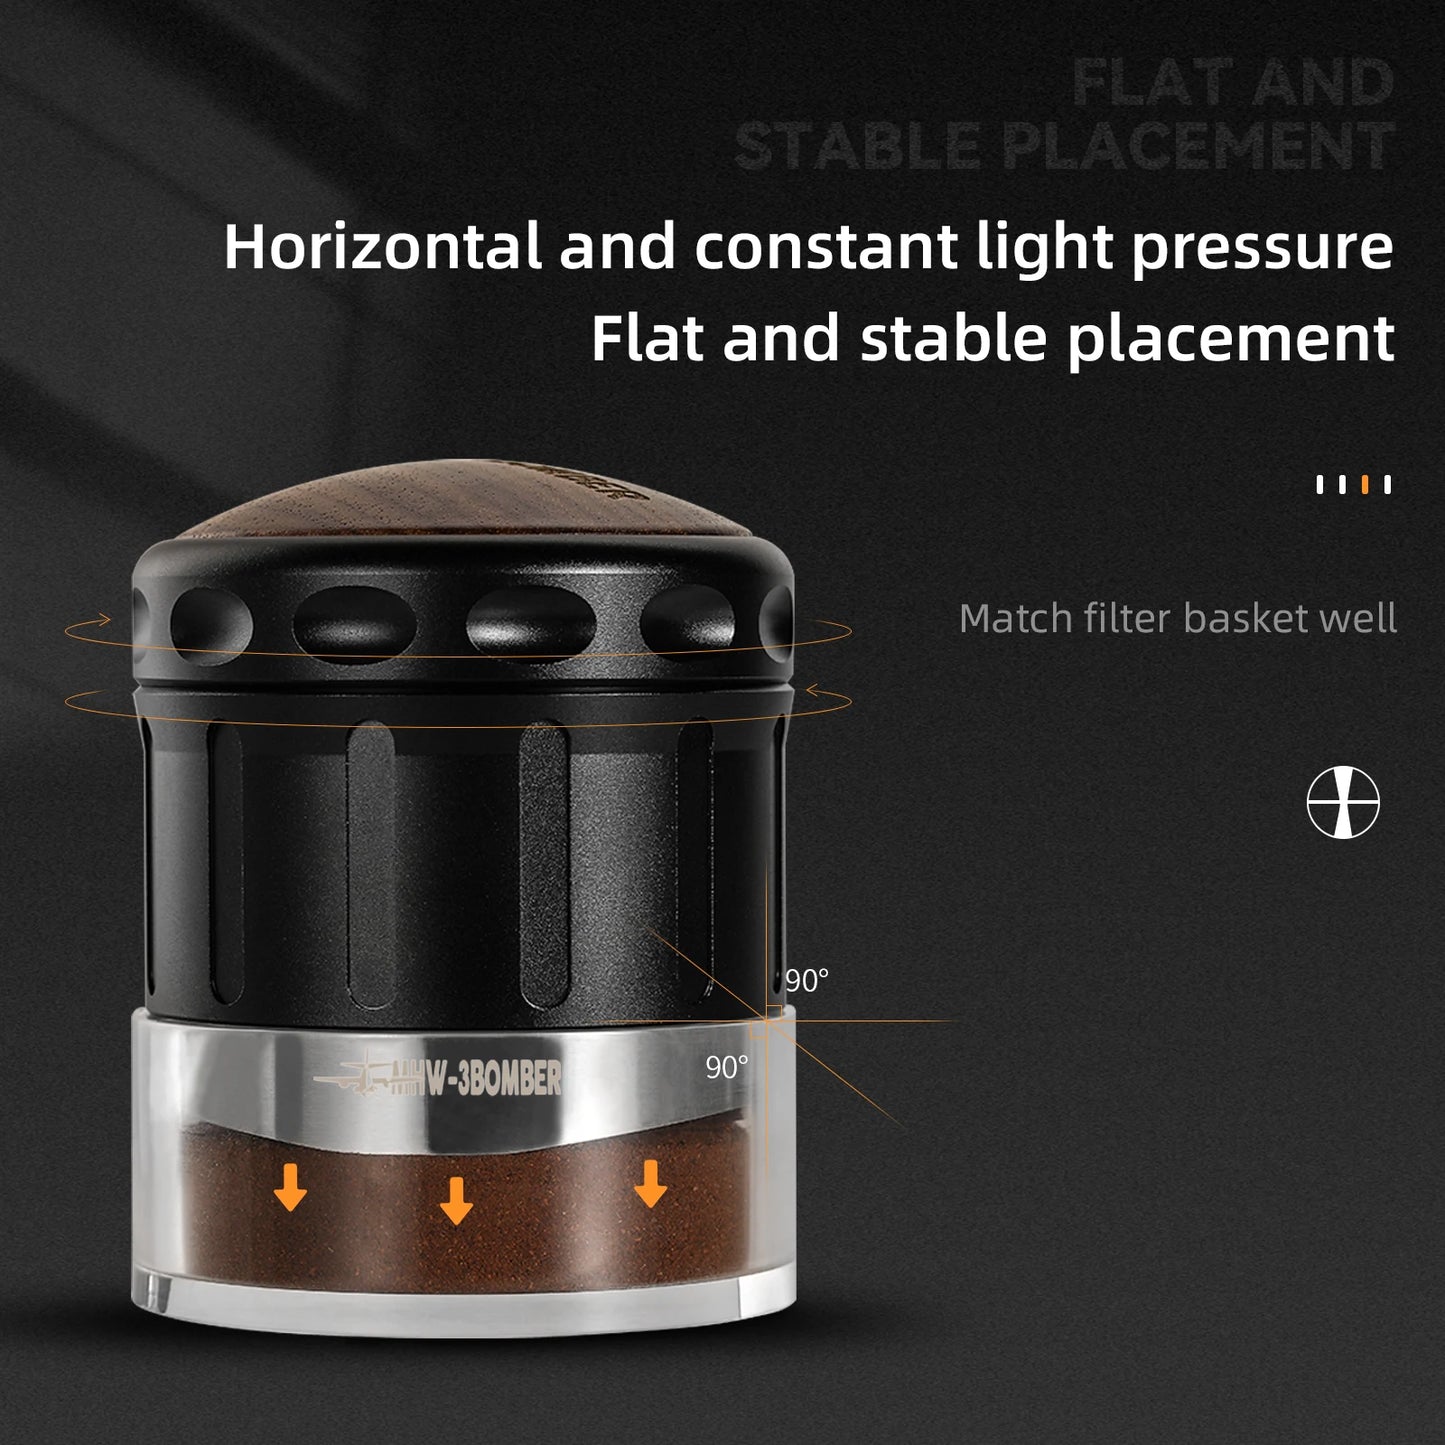 MHW-3BOMBER Adaptive Height 58.35mm Coffee Distributor & Adjustable Depth Espresso Tamper Home Barista Leveler Tool Accessories